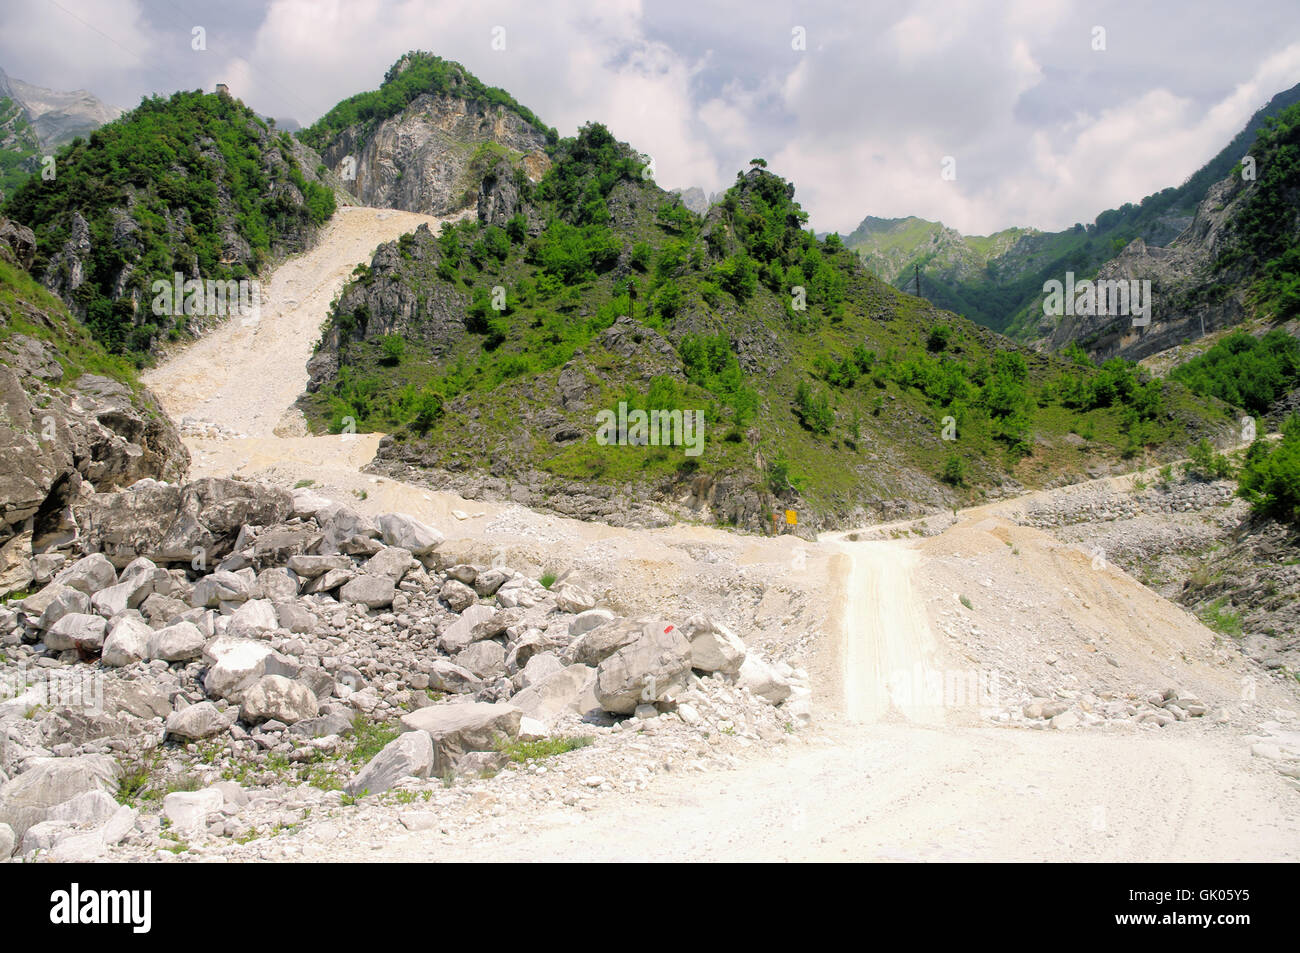 Carrara-Marmor-Steinbruch - Grube Carrara Marmor Stein 07 Stockfoto